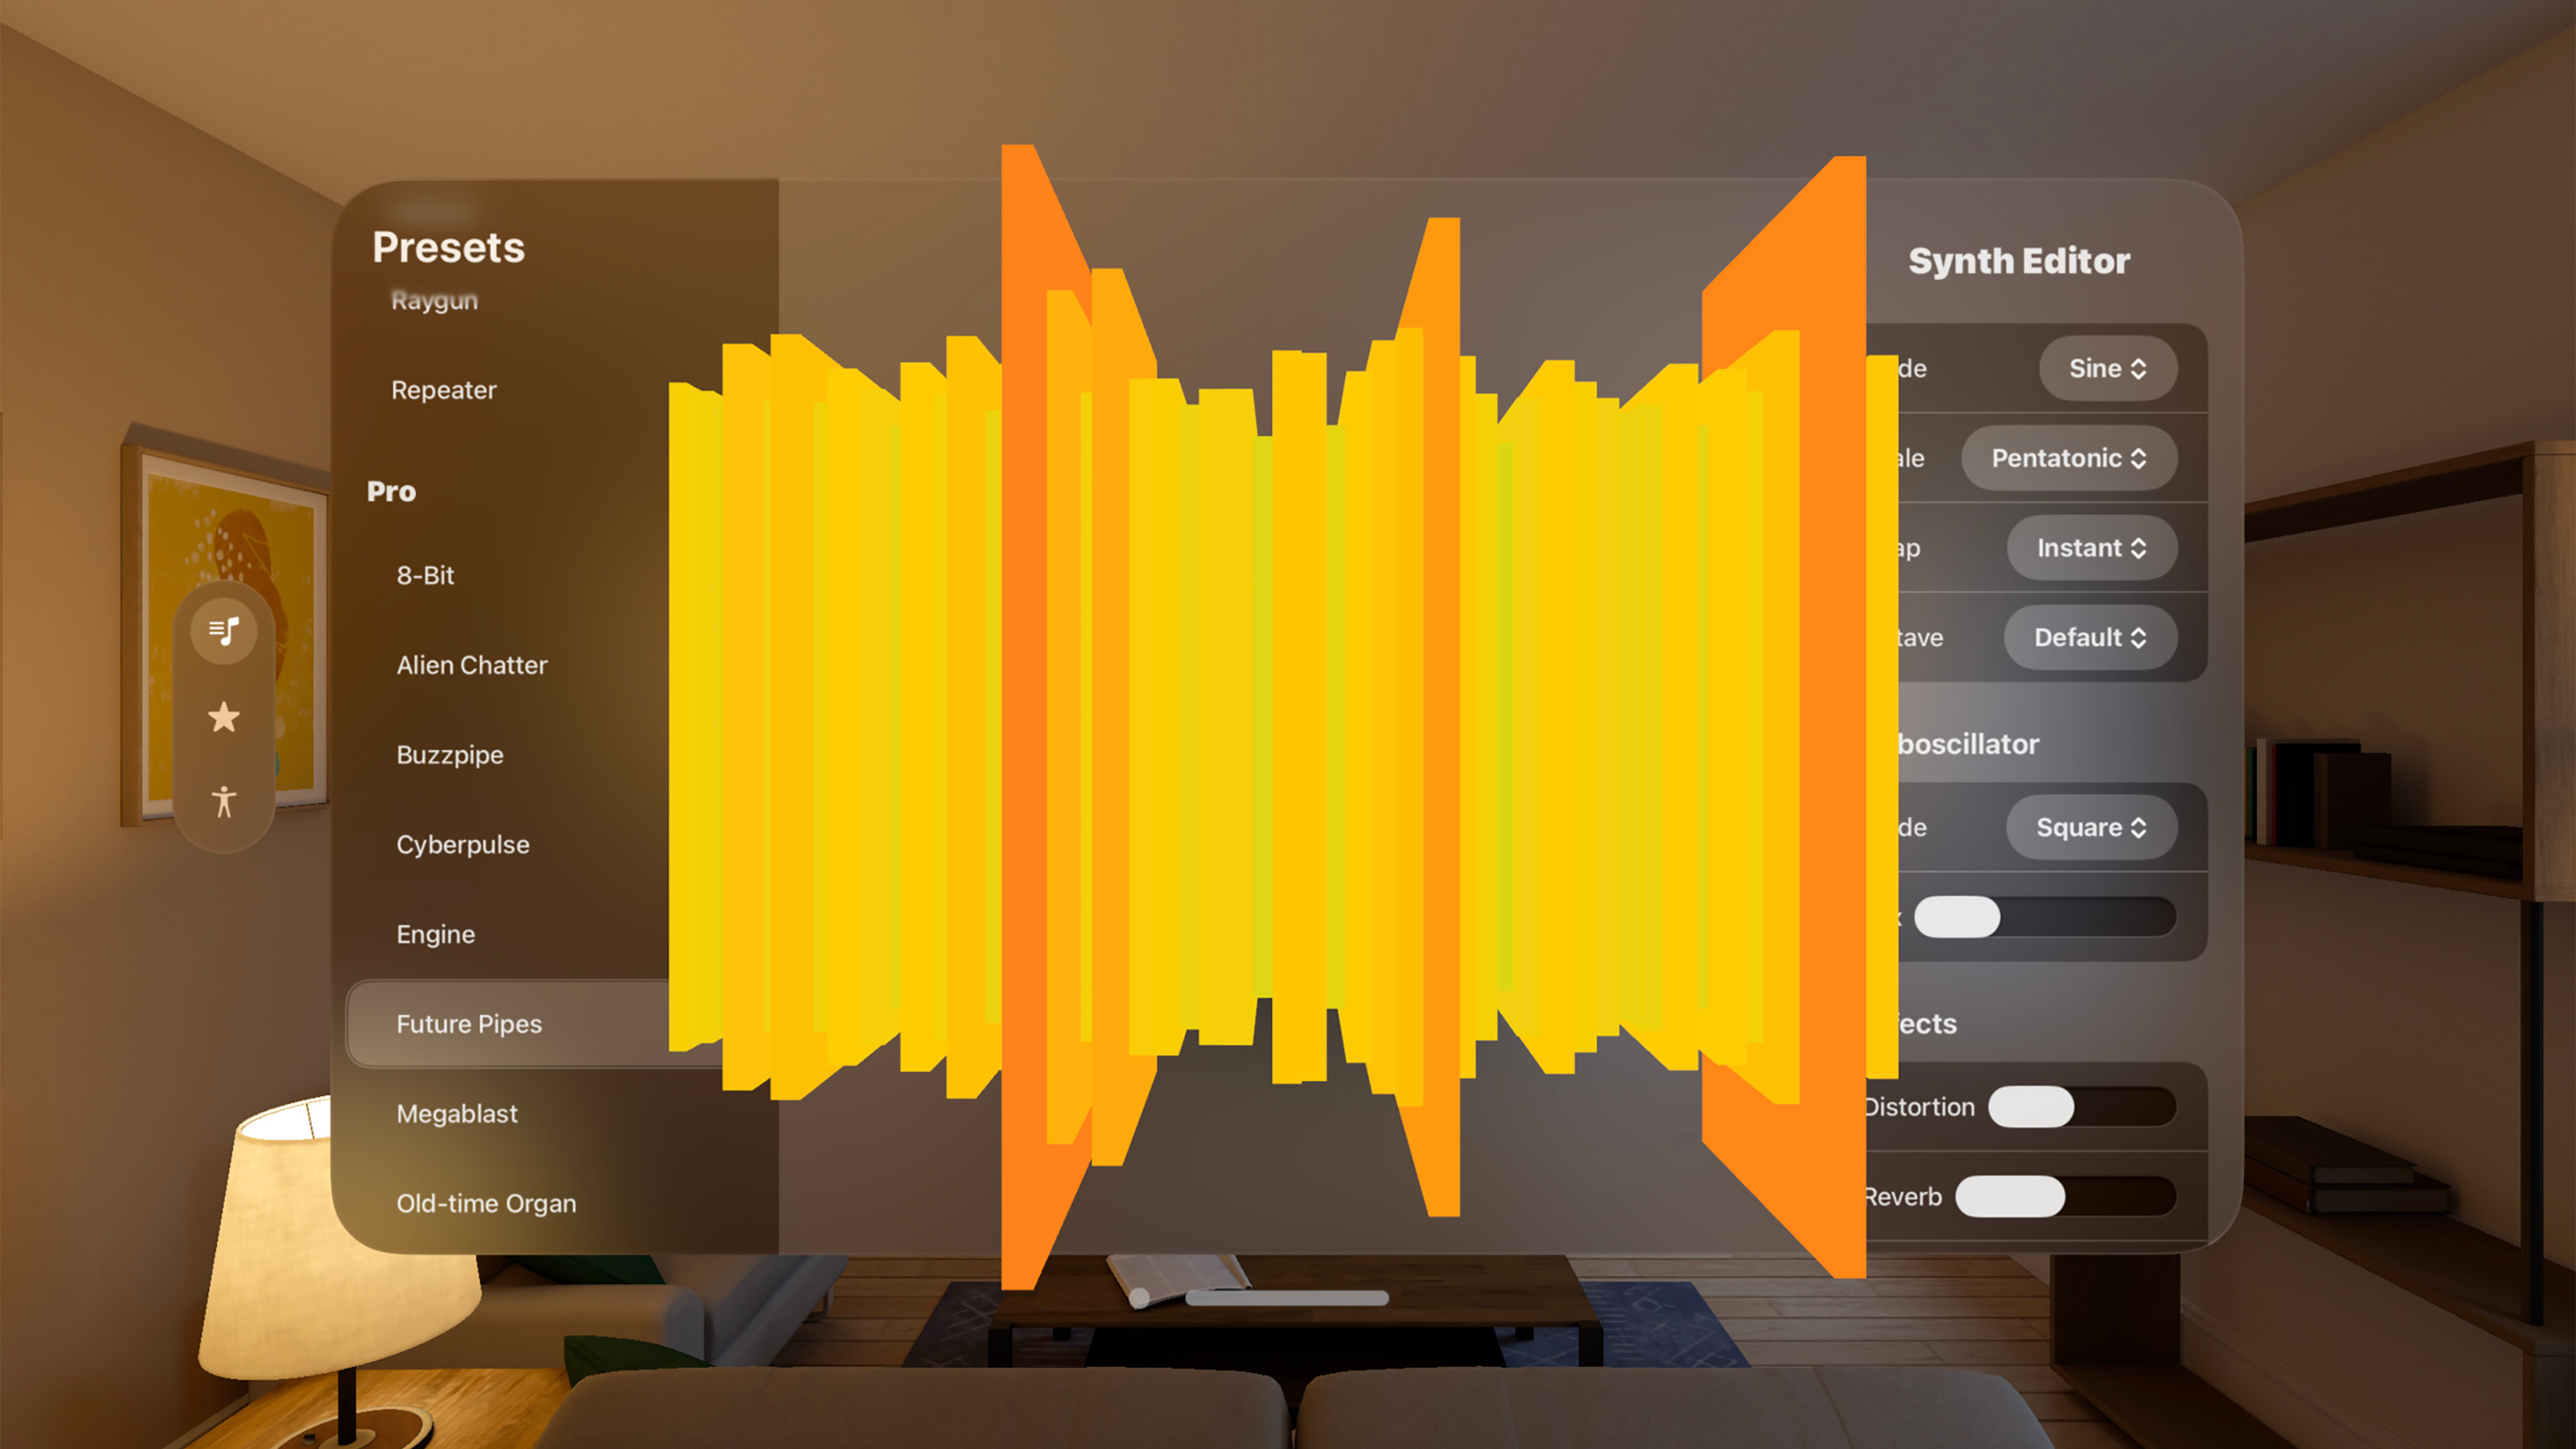 Hands in front of a visionOS app, showing a sound waveform.